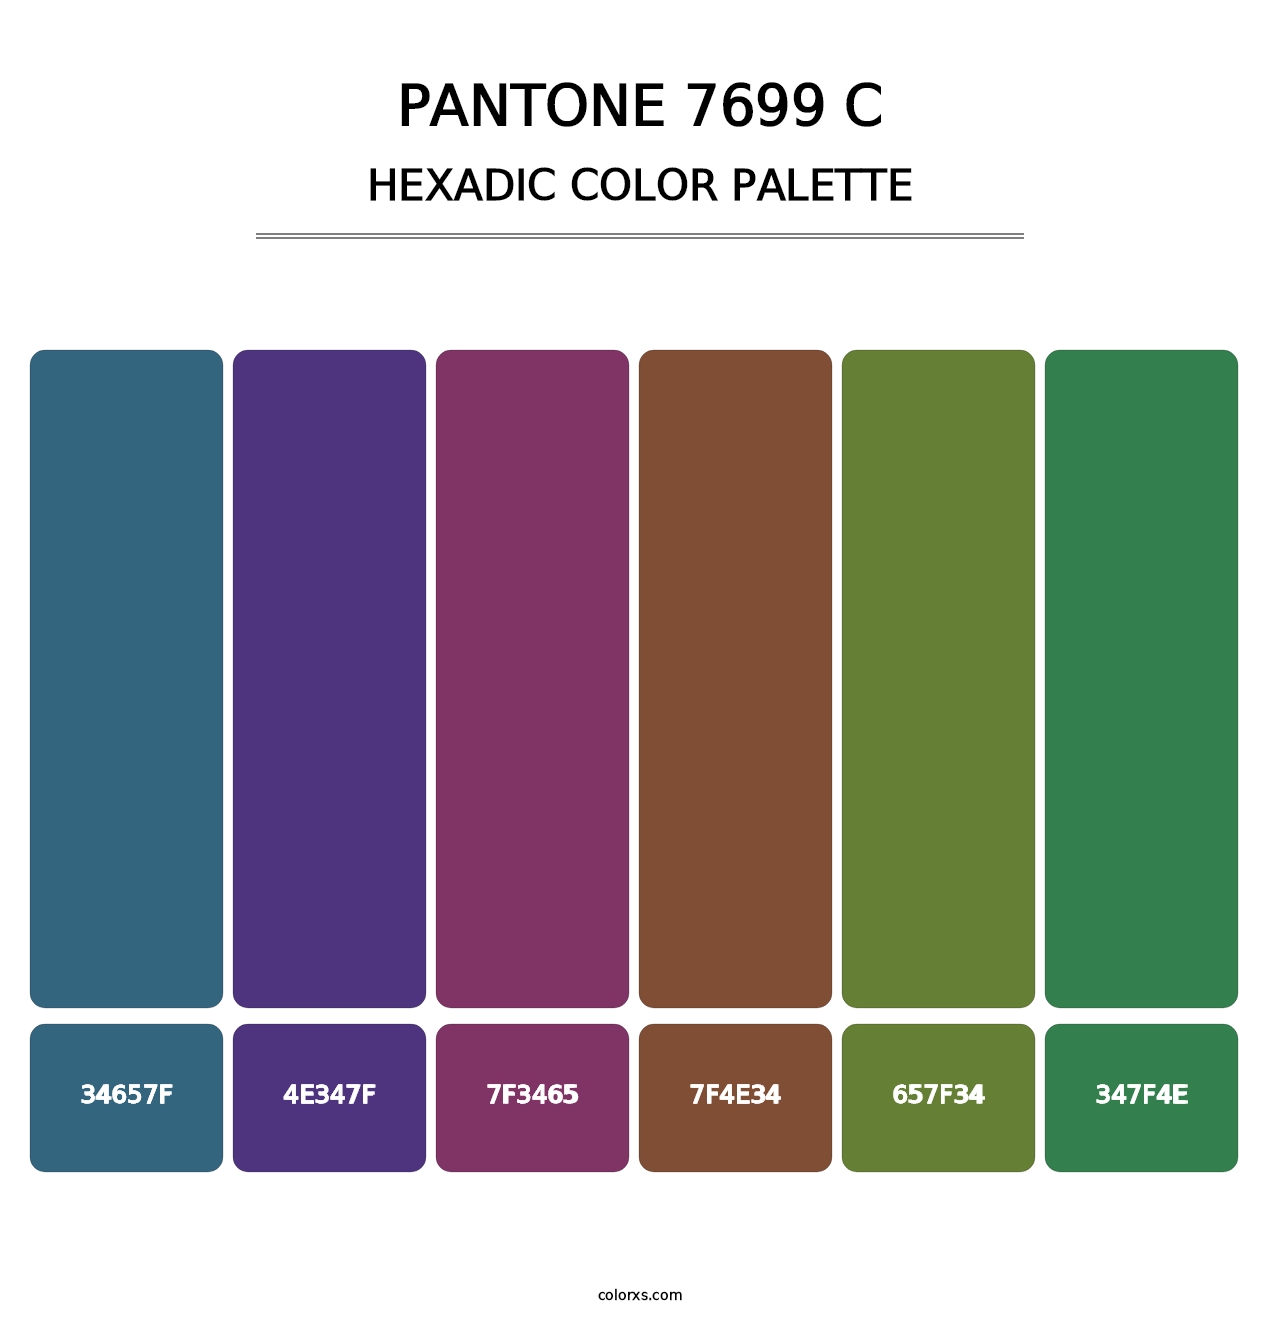 PANTONE 7699 C - Hexadic Color Palette